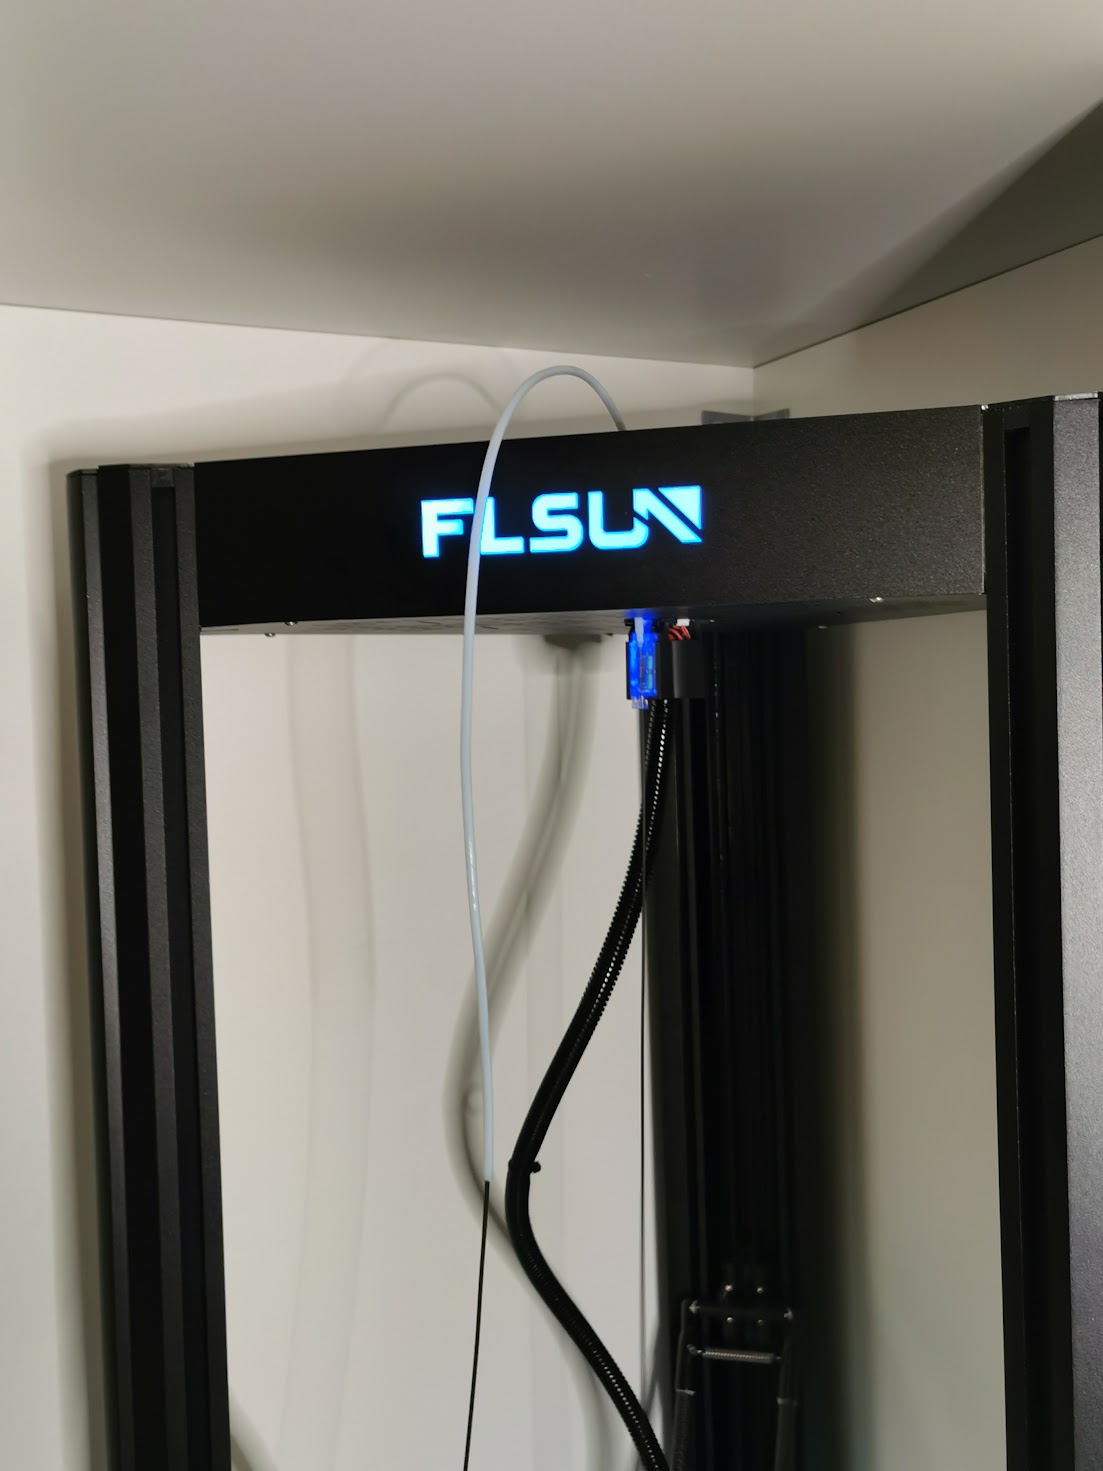 Flsun V400 - Remove filament spool from top of printer